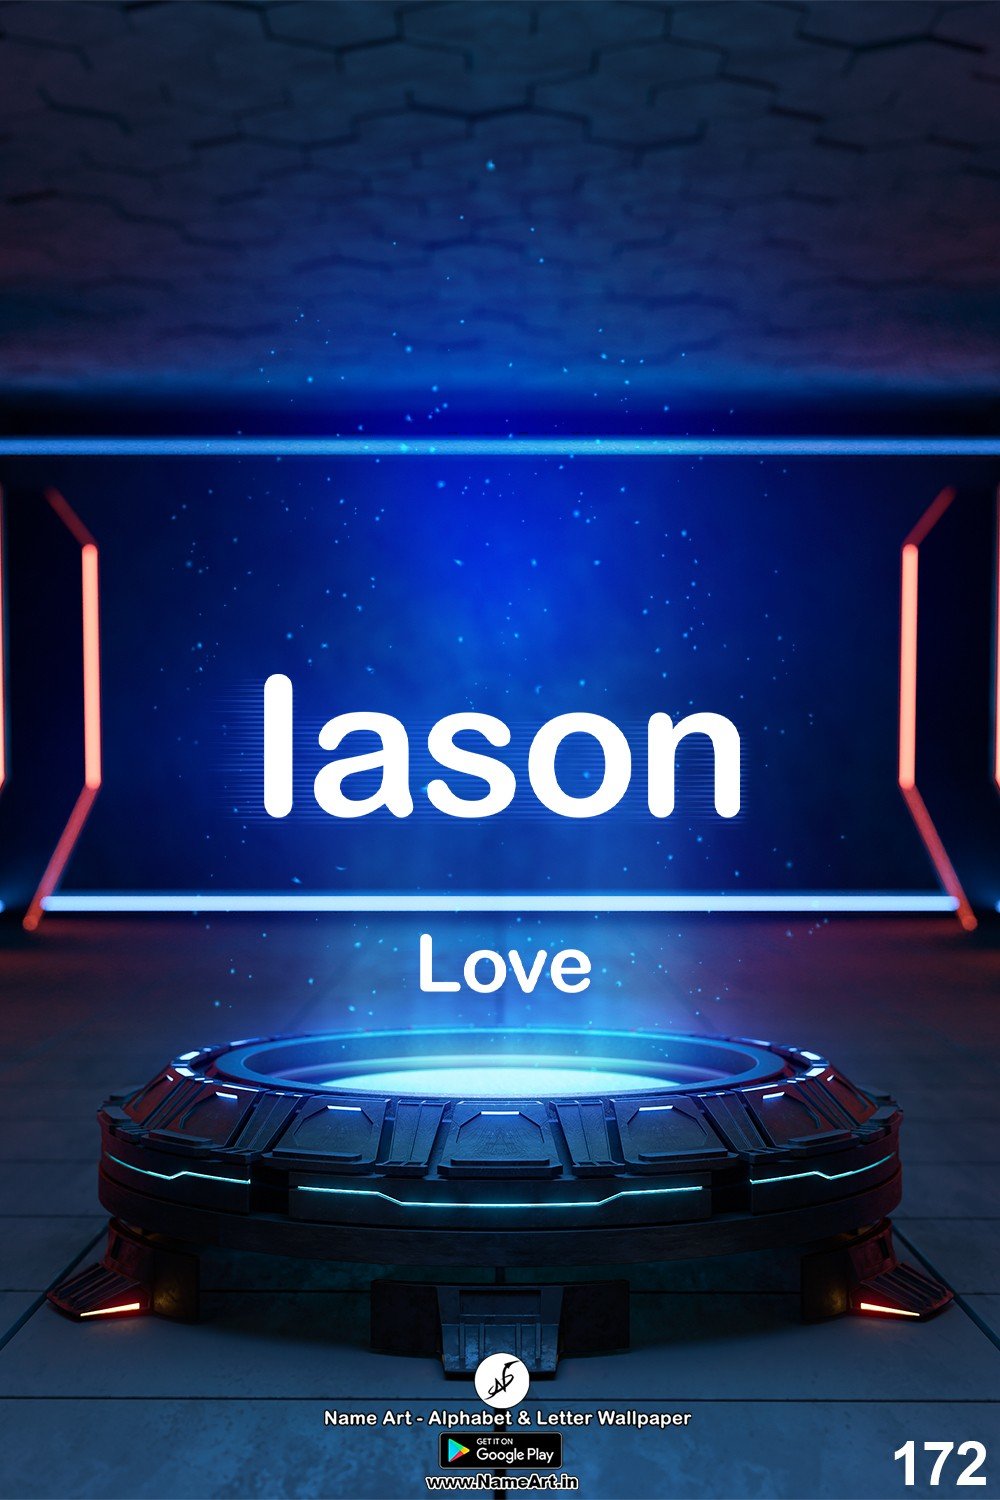 Iason | Whatsapp Status Iason | Happy Birthday Iason !! | New Whatsapp Status Iason Images |